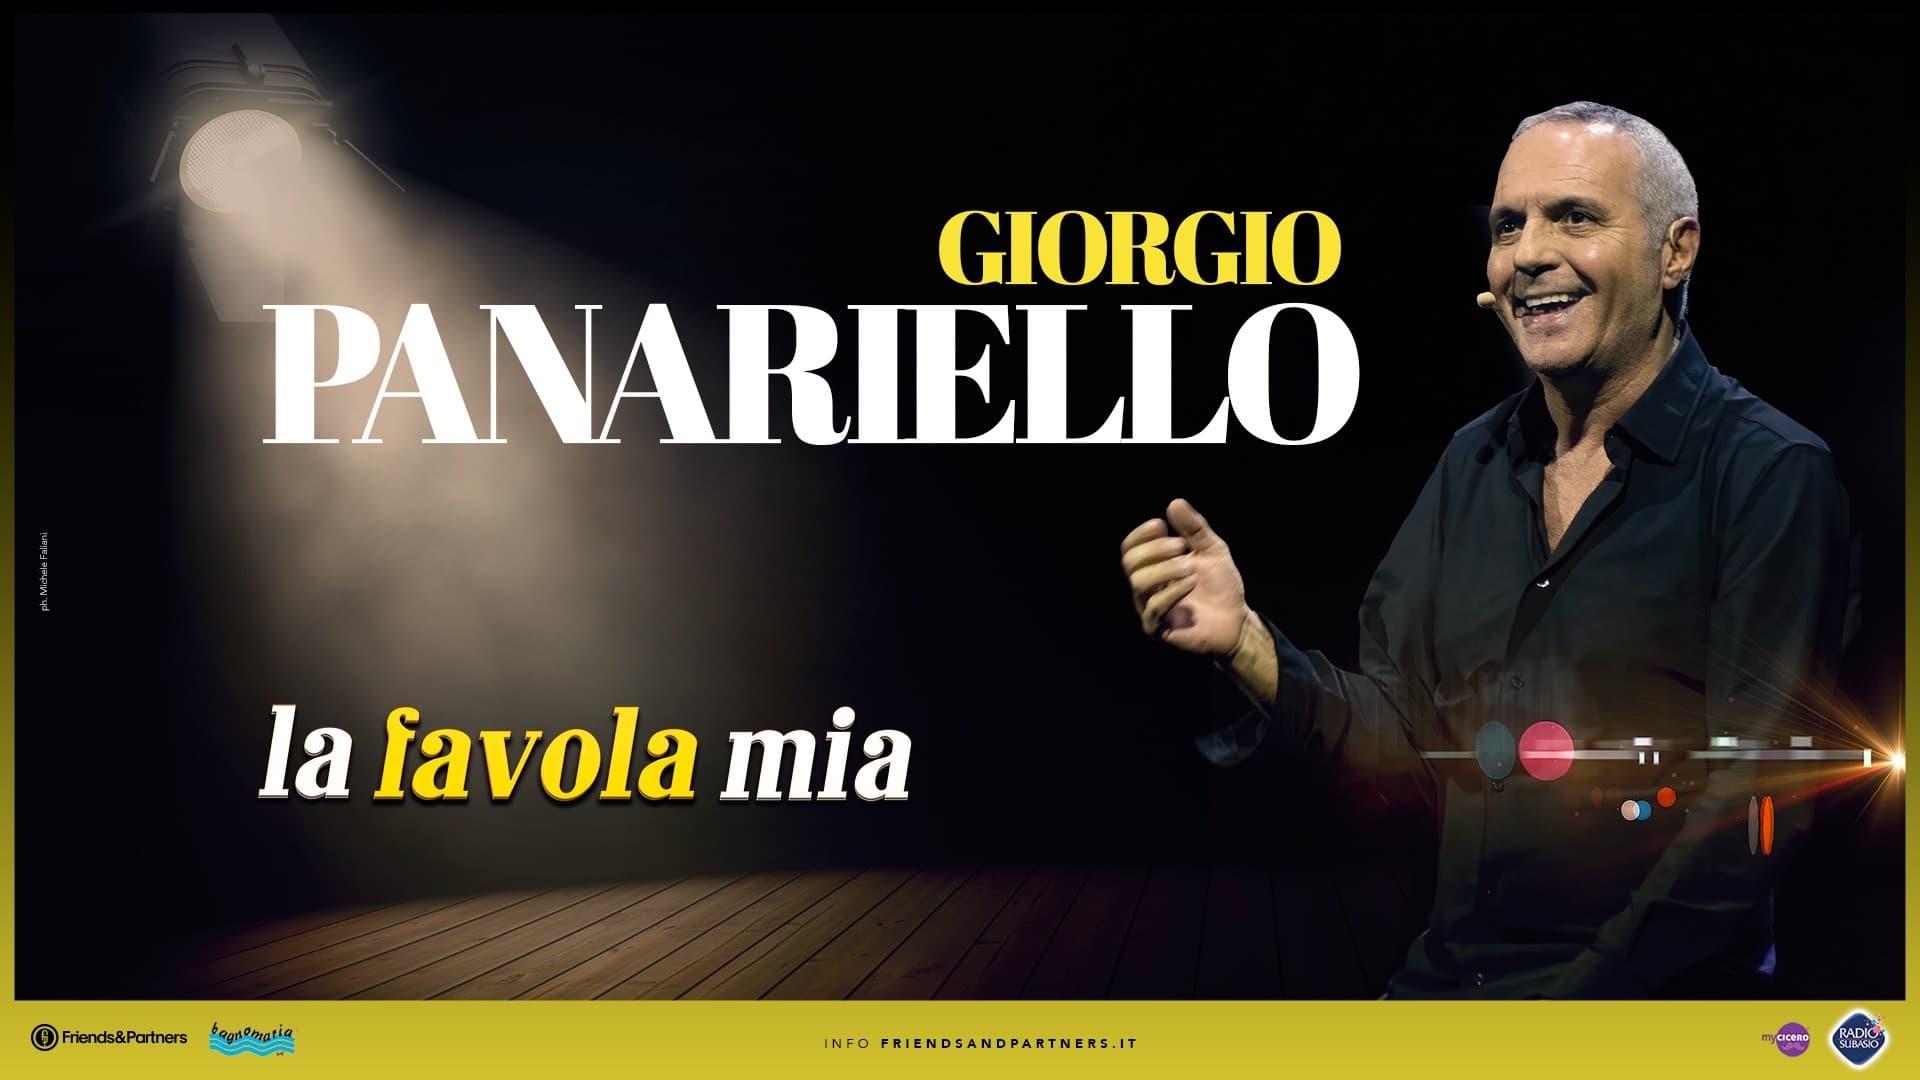 Giorgio Panariello backdrop